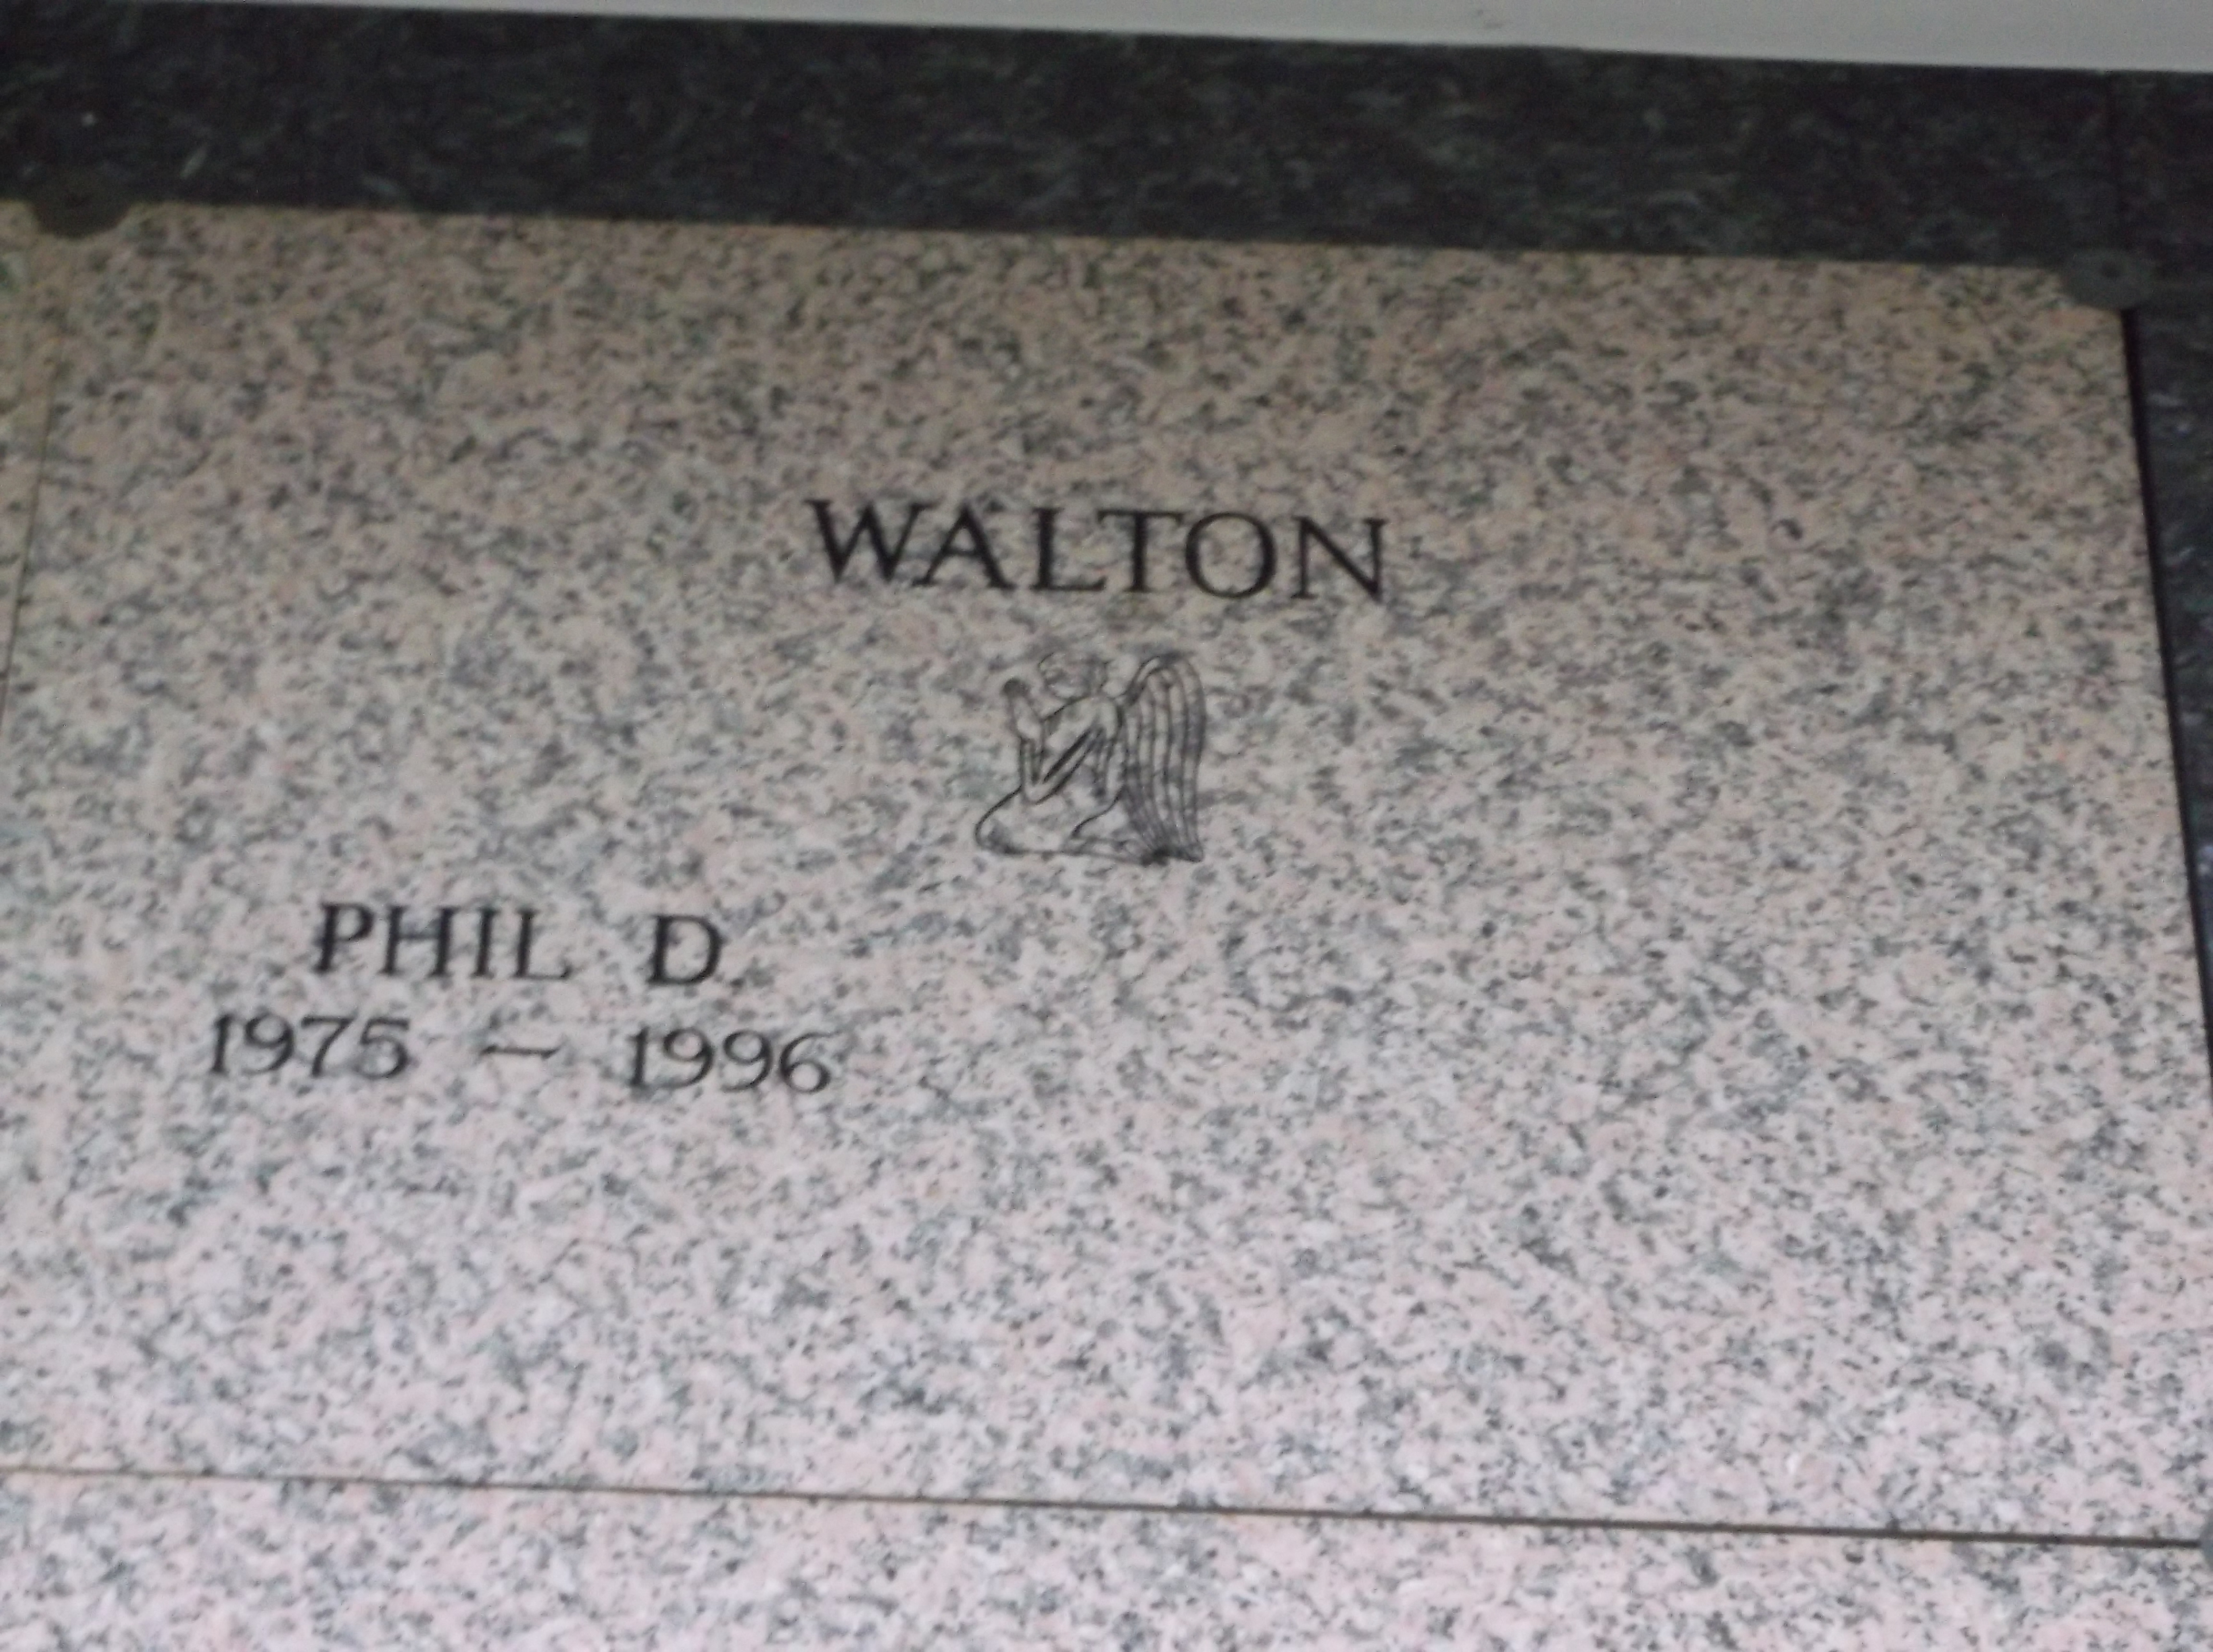 Phil D Walton